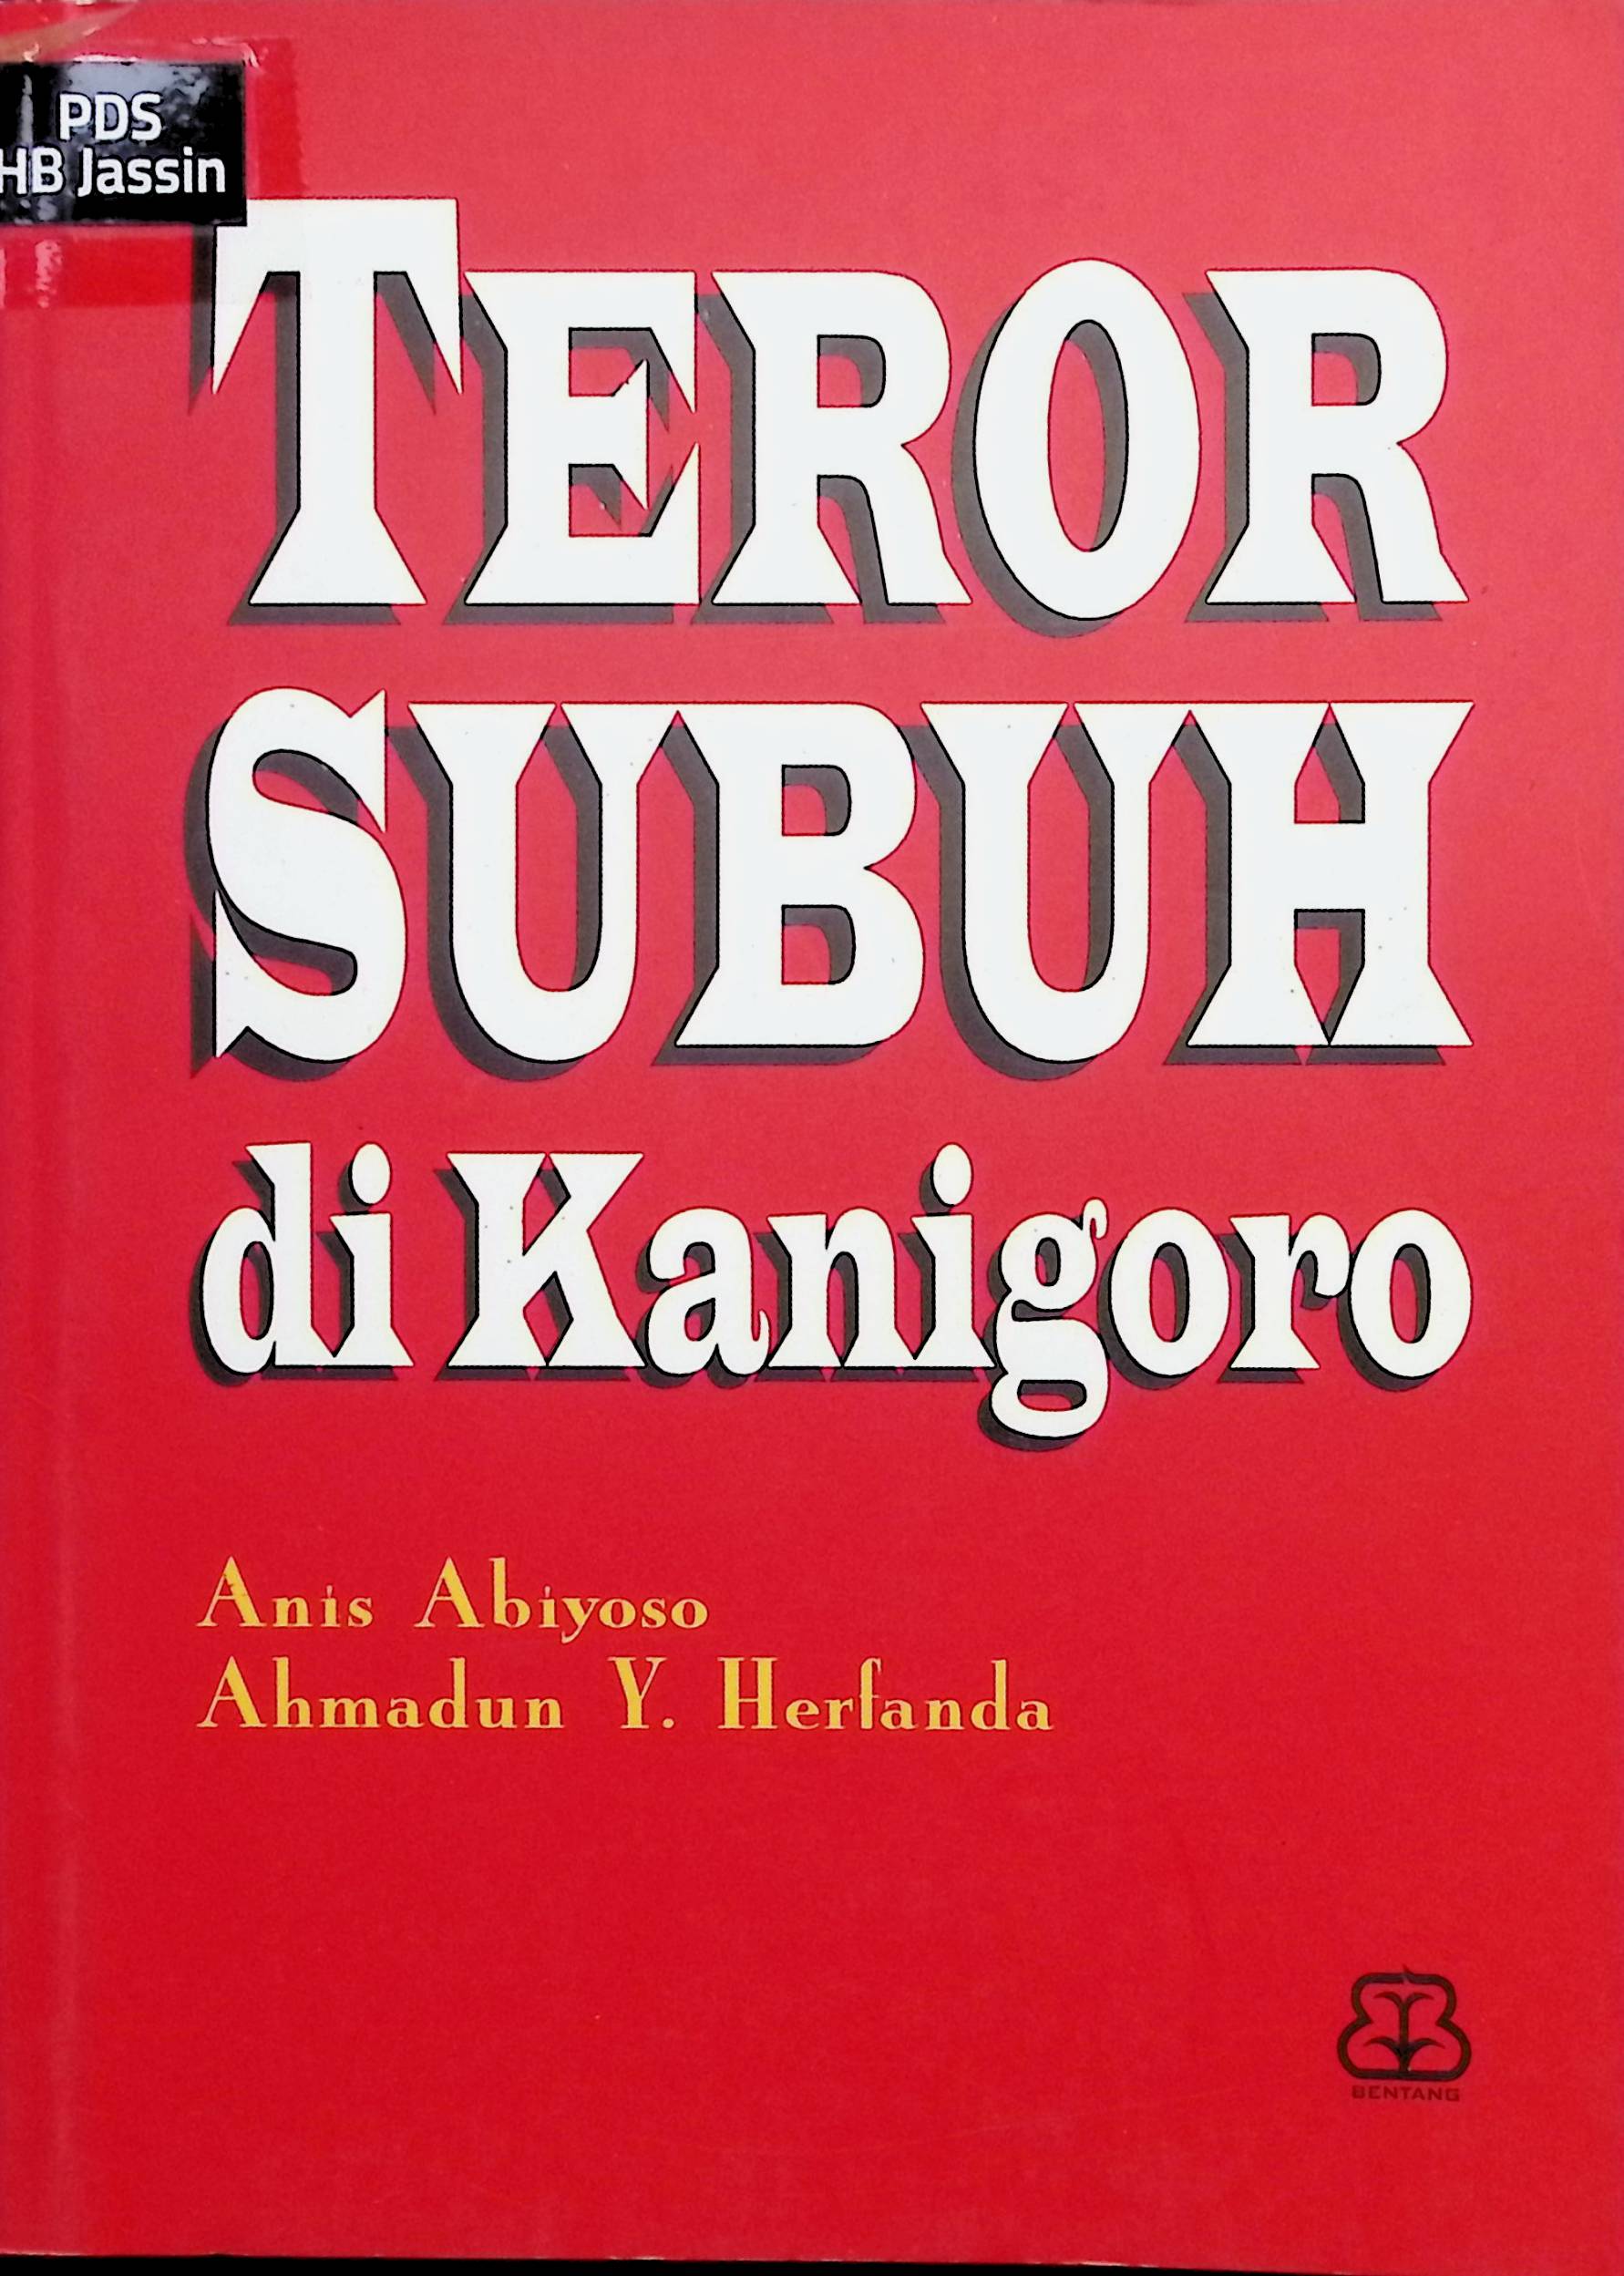 Teror Subuh di Kanigoro